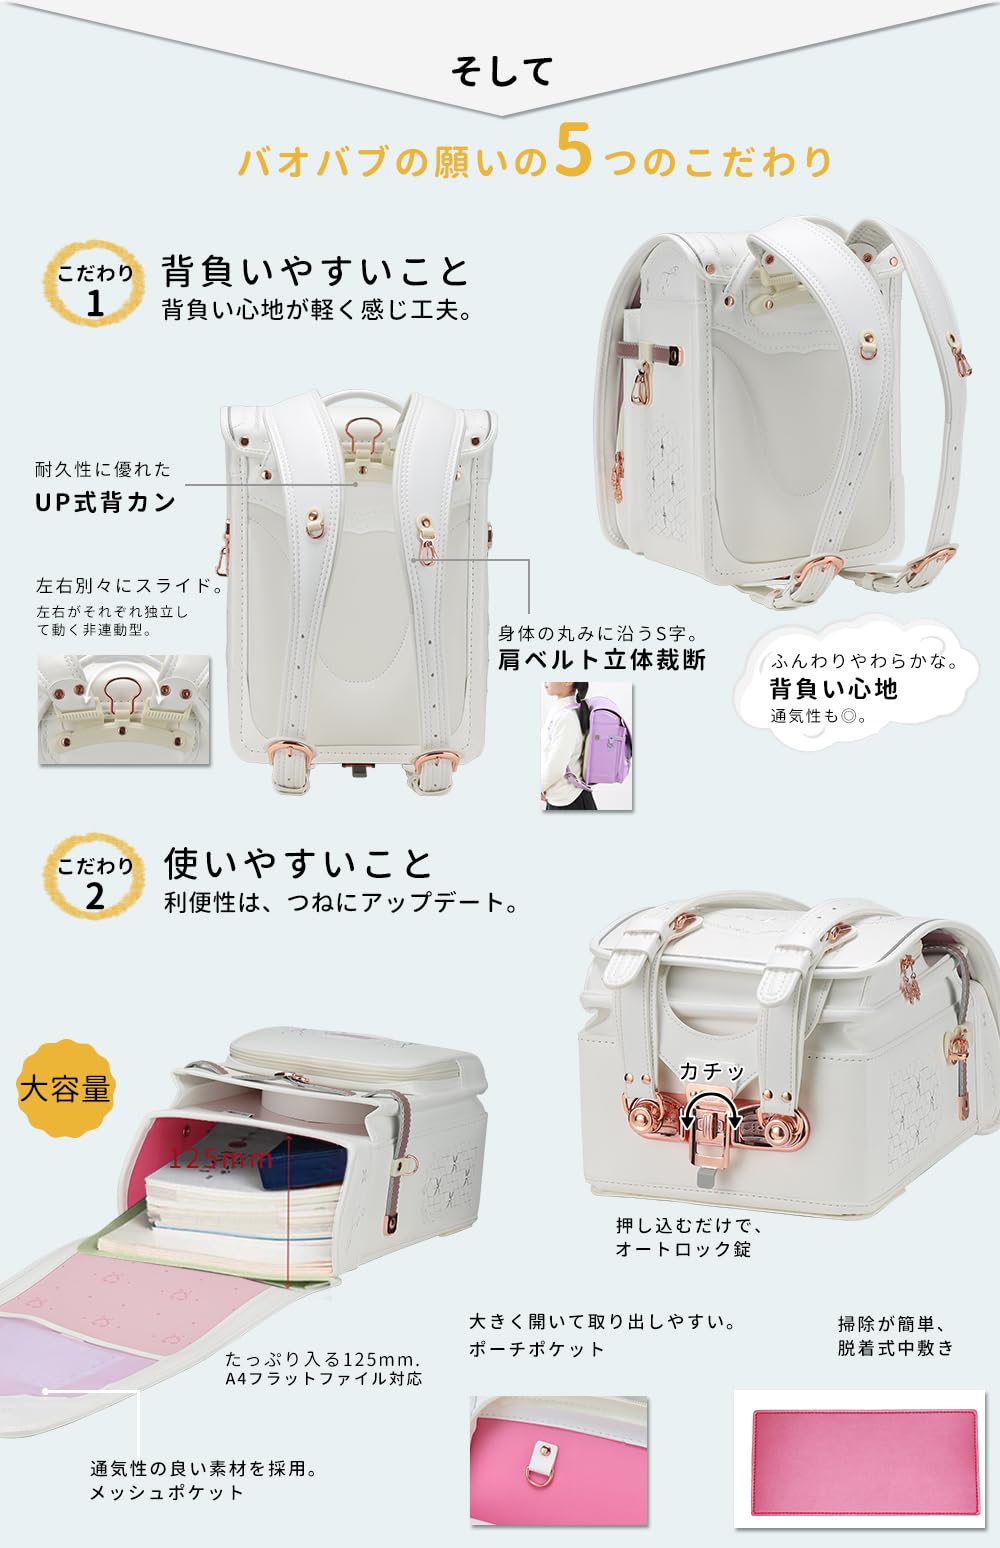 Baobab's wish Ransel Randoseru Backpack Semi-automatic satchel Japanese Elementary school bag for girls boys PU bab-rdjn01 (New White)